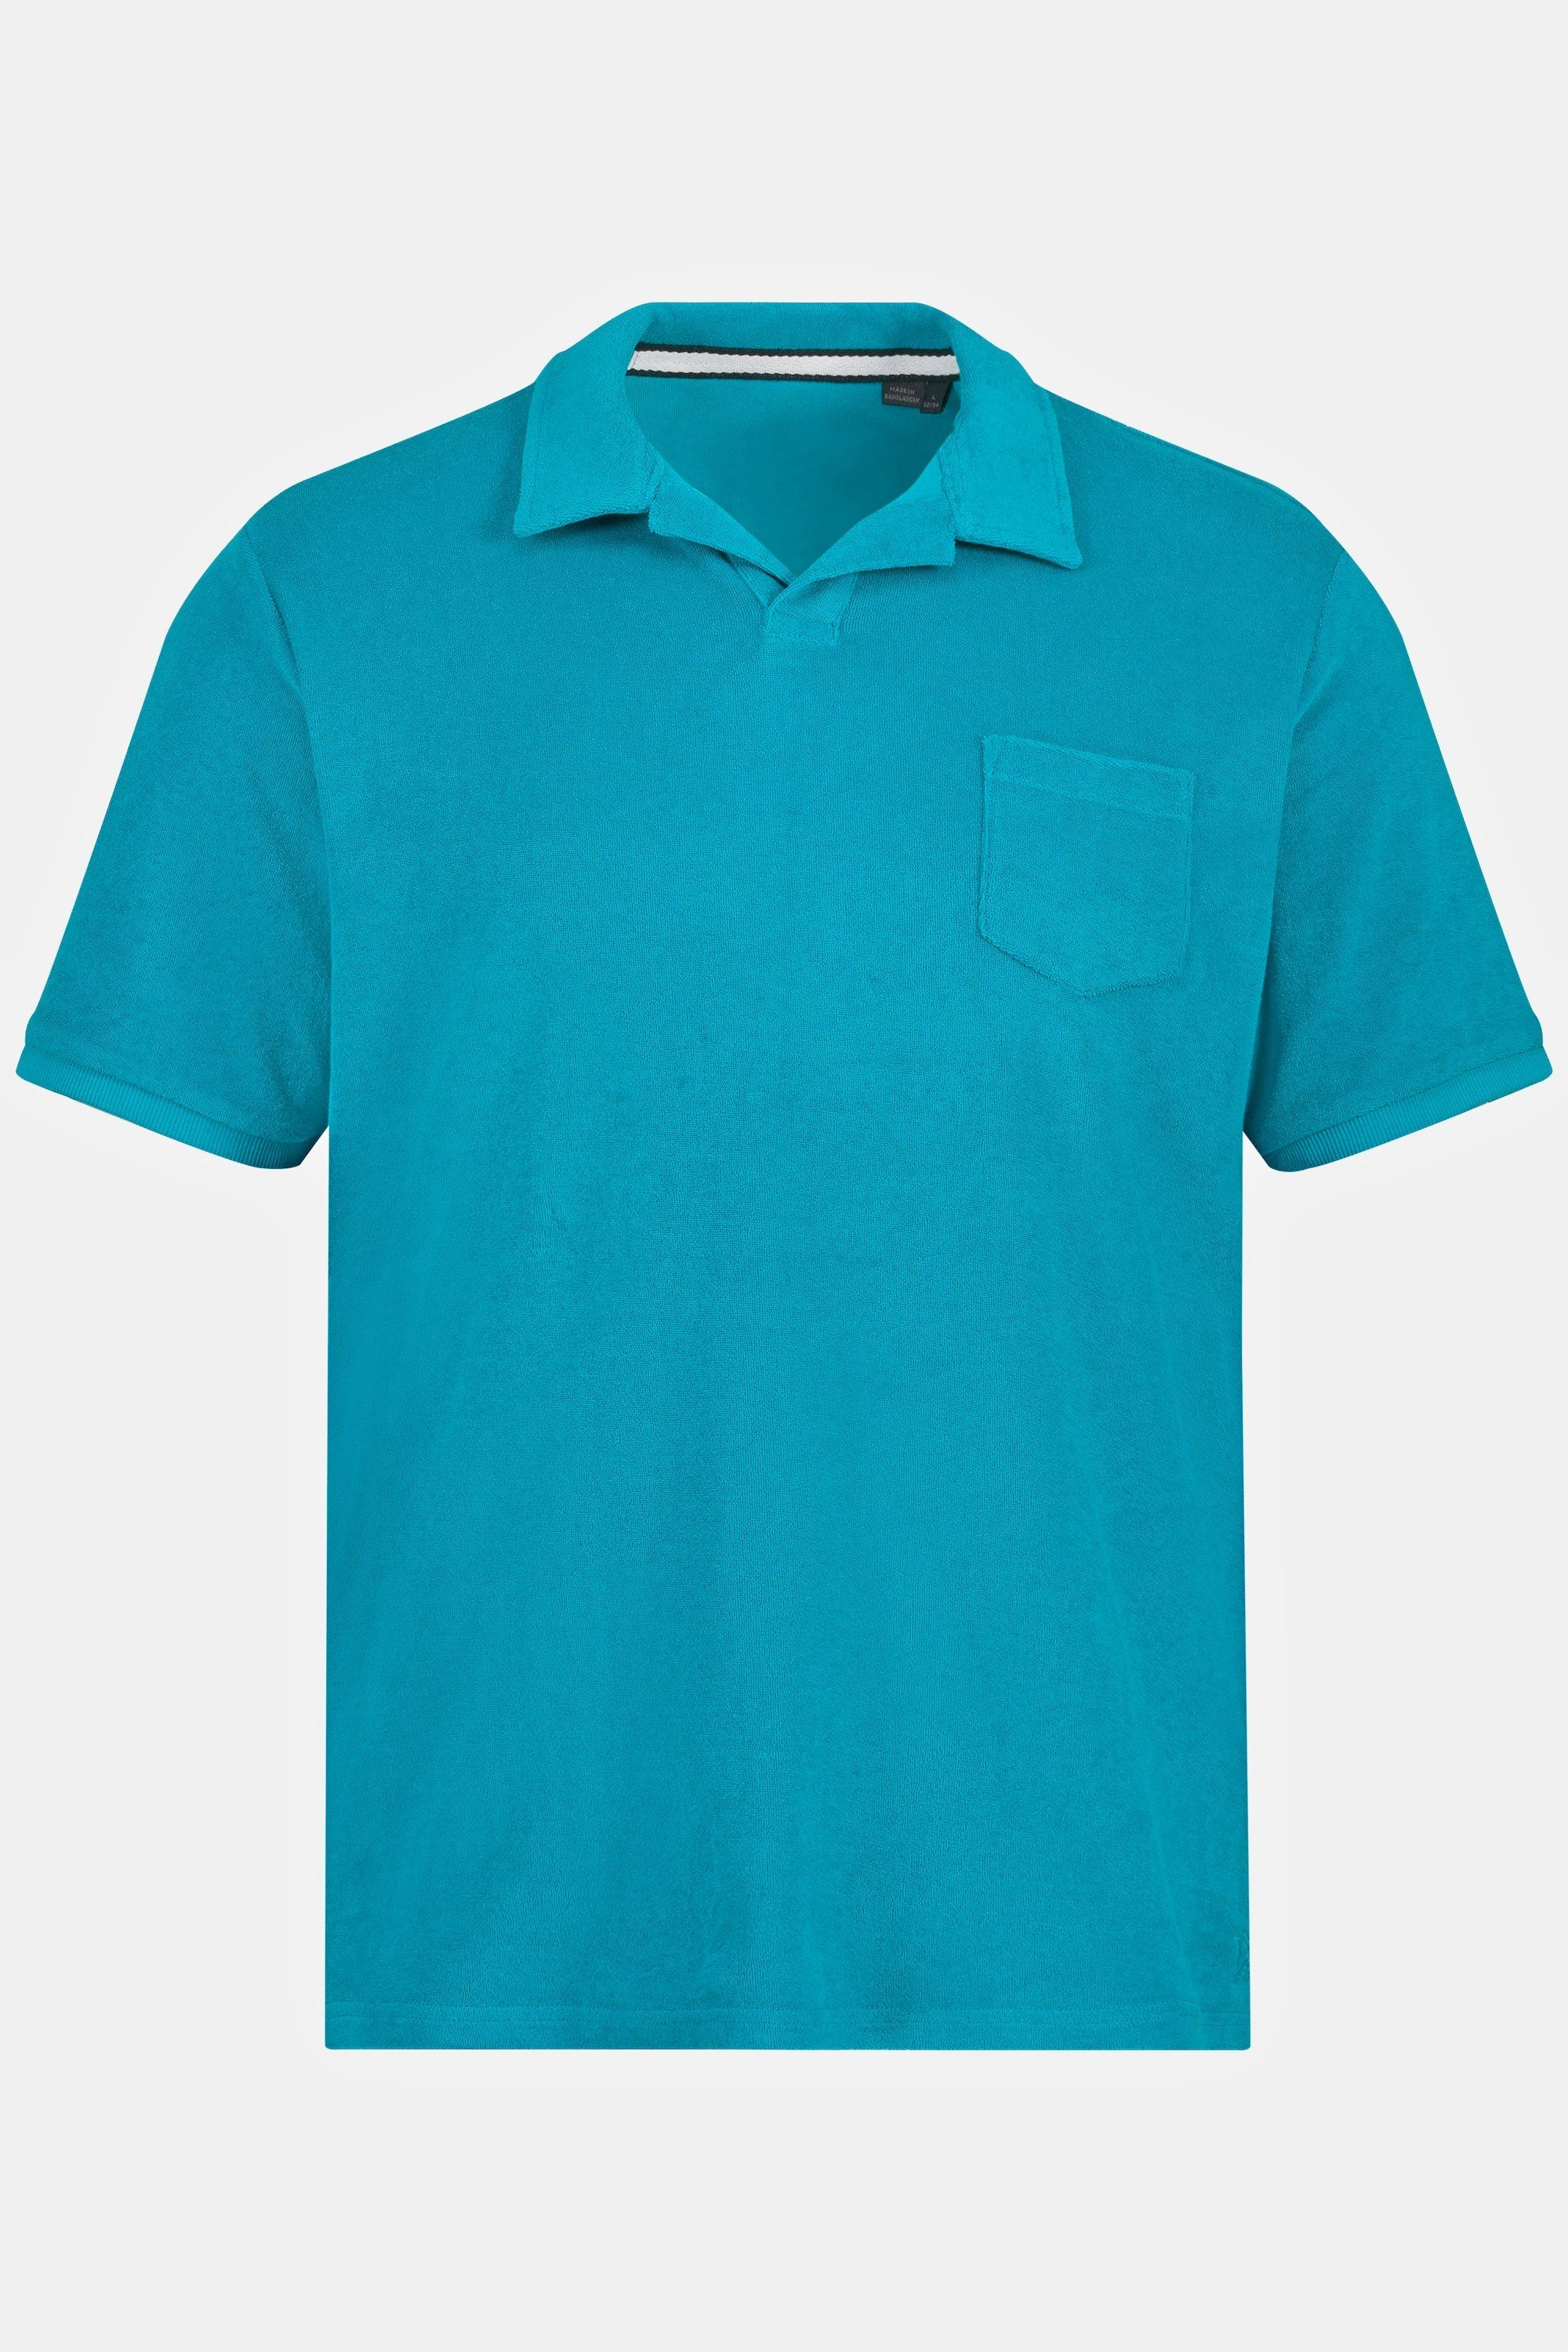 JP1880 Halbarm dunkles Cuba-Kragen türkis Poloshirt Poloshirt Frottee